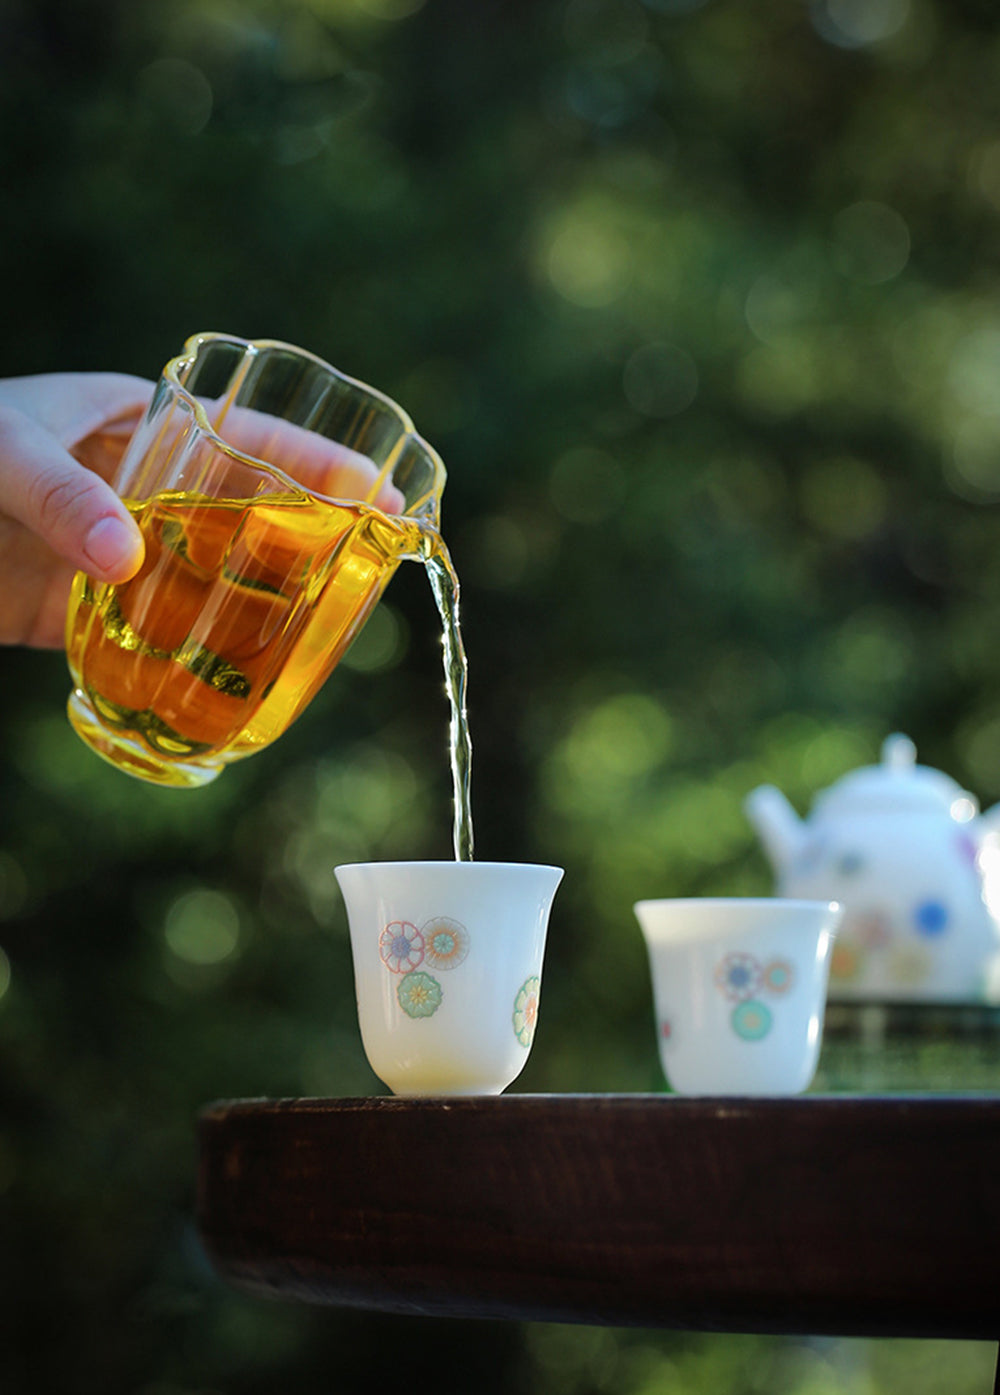 IwaiLoft 白玉 茶杯 茶托セット 花柄 湯のみ 湯呑み お茶 カップ コップ 来客用 お茶用品 ティーウェア 中国茶器 台湾茶器 贈 – 茶器・コーヒー用品を選ぶ  - IwaiLoft